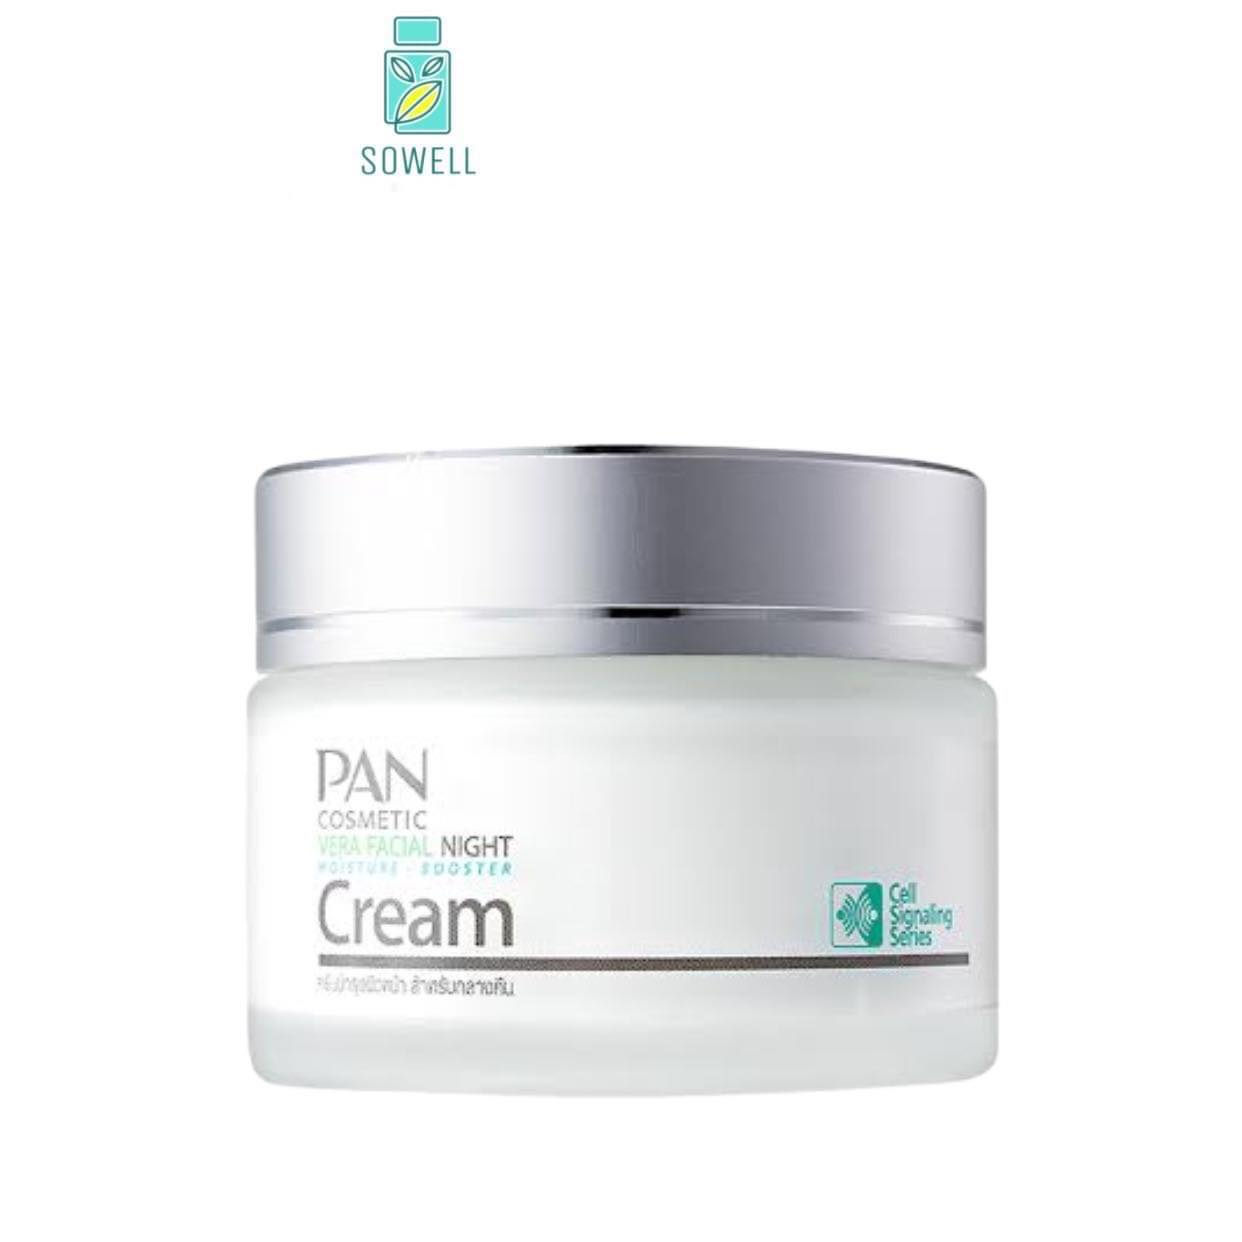 Pan cosmetic Vera Facial Night Cream 45g.